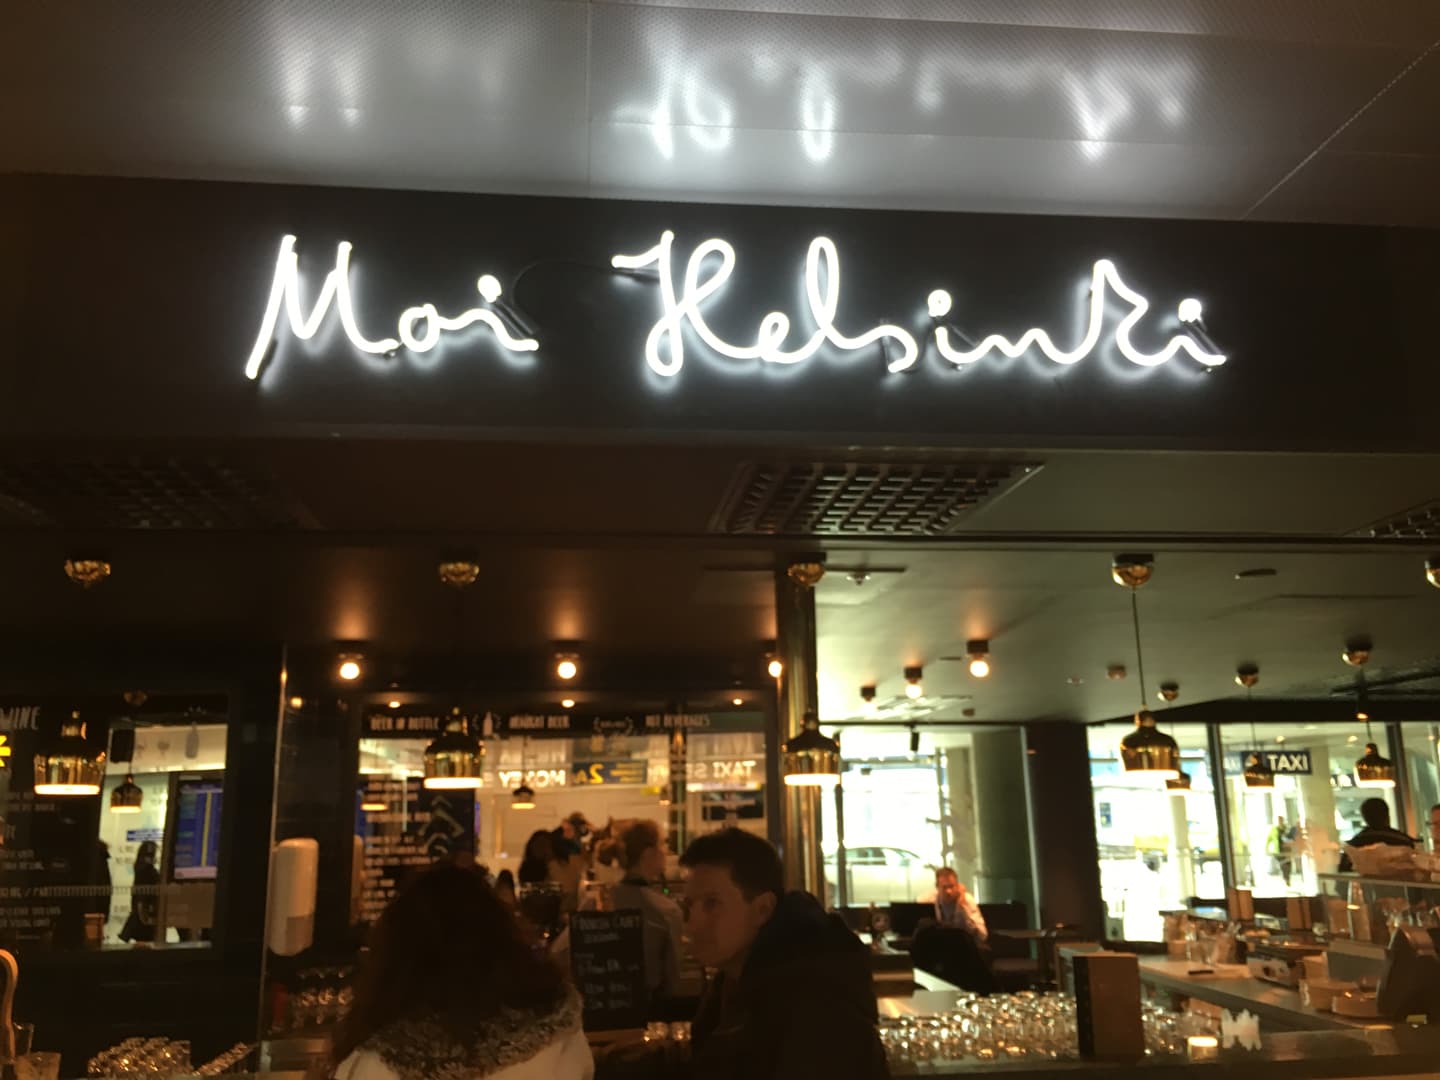 The bar “Moi Helsinki”